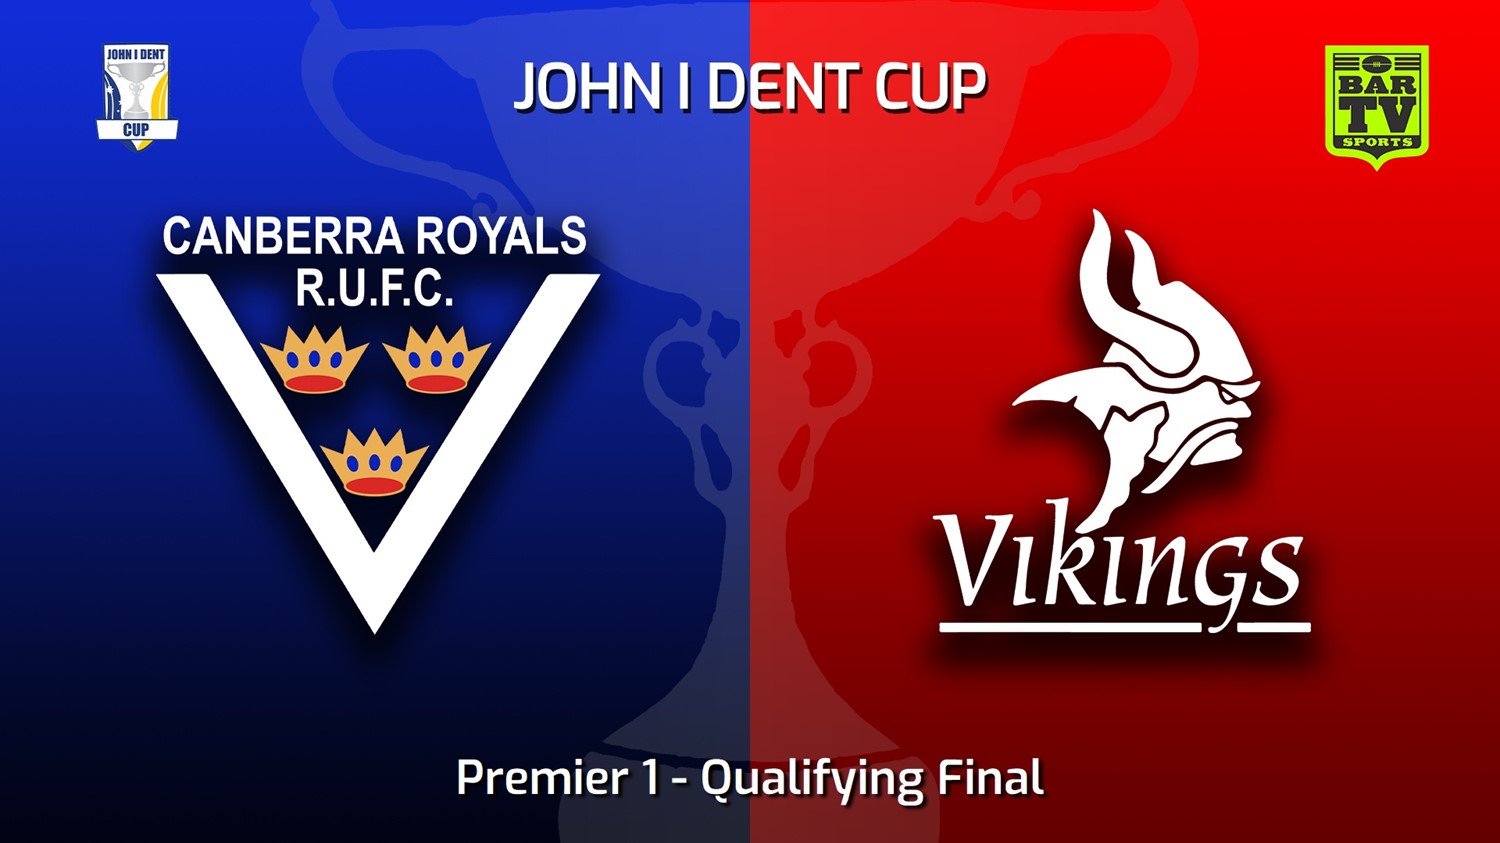 220827-John I Dent (ACT) Qualifying Final - Premier 1 - Canberra Royals v Tuggeranong Vikings Minigame Slate Image